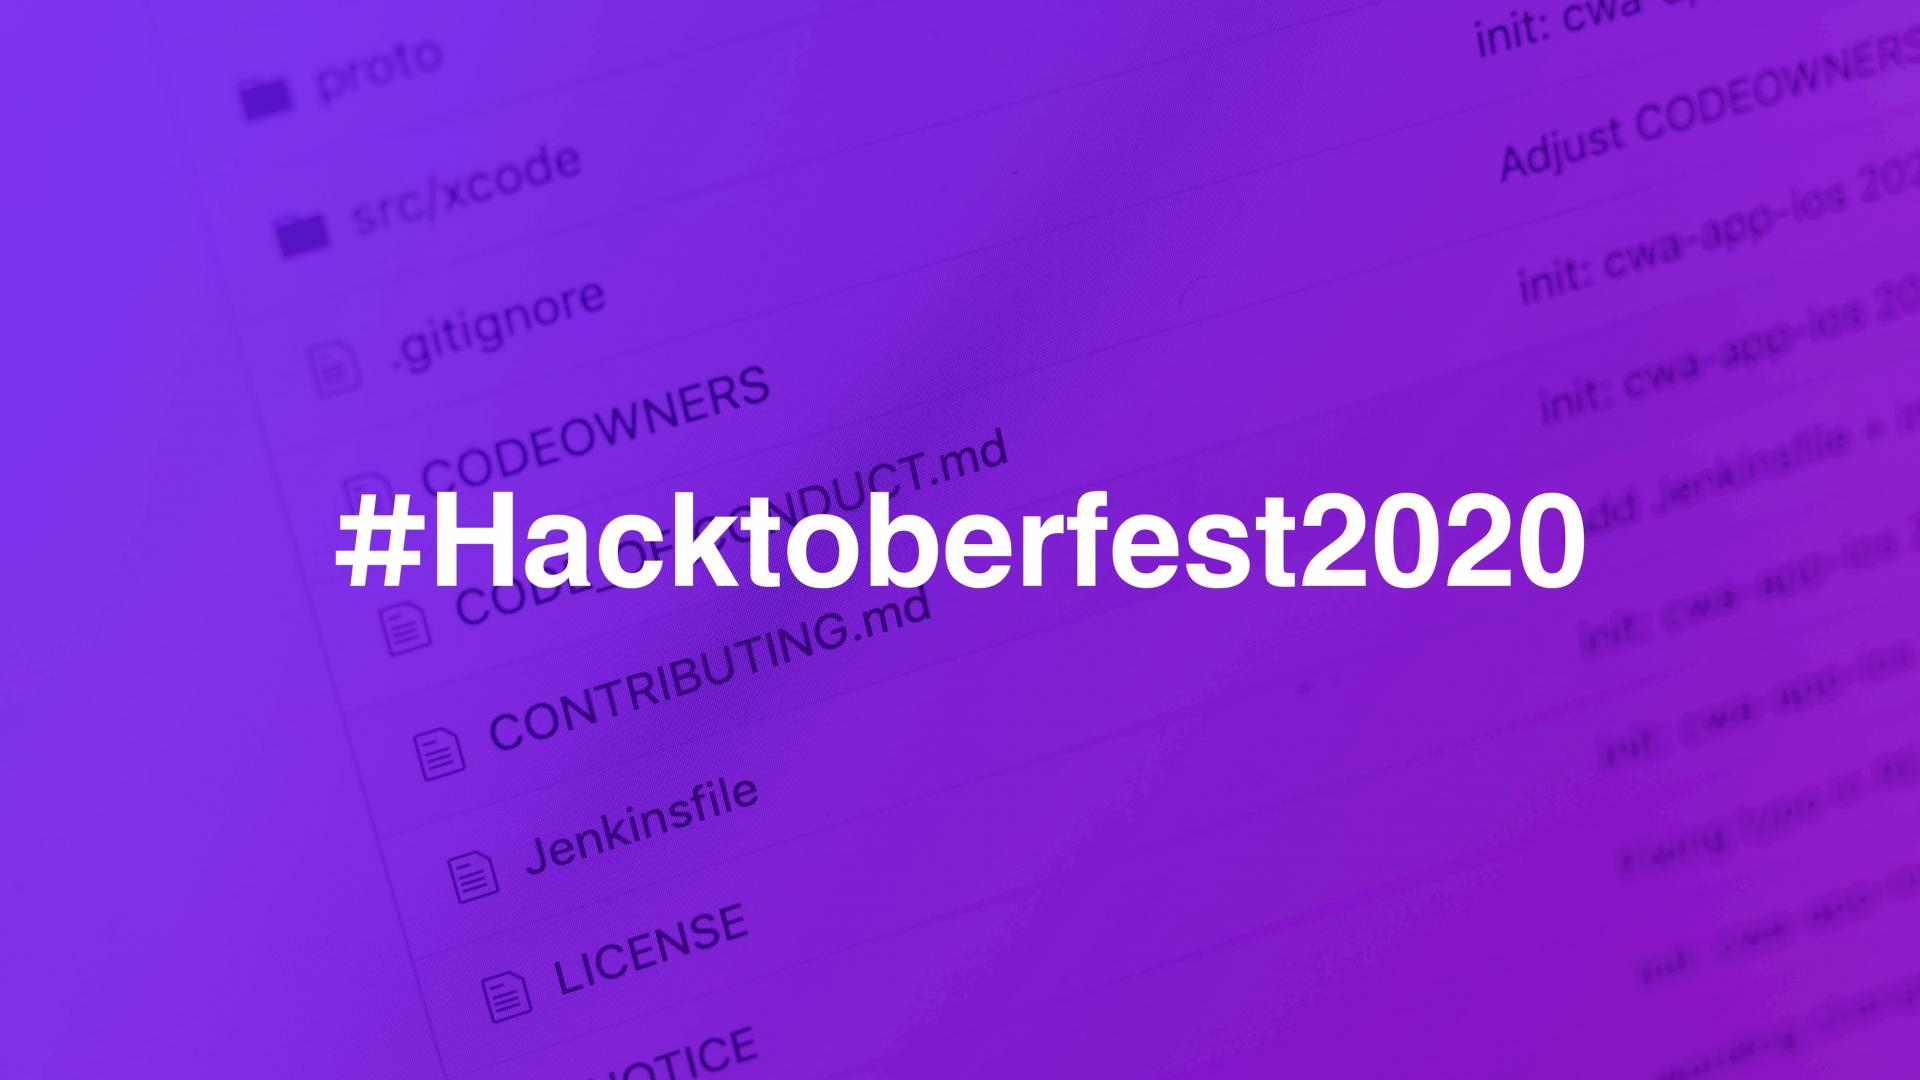 Nearing the start of Hacktoberfest 2020